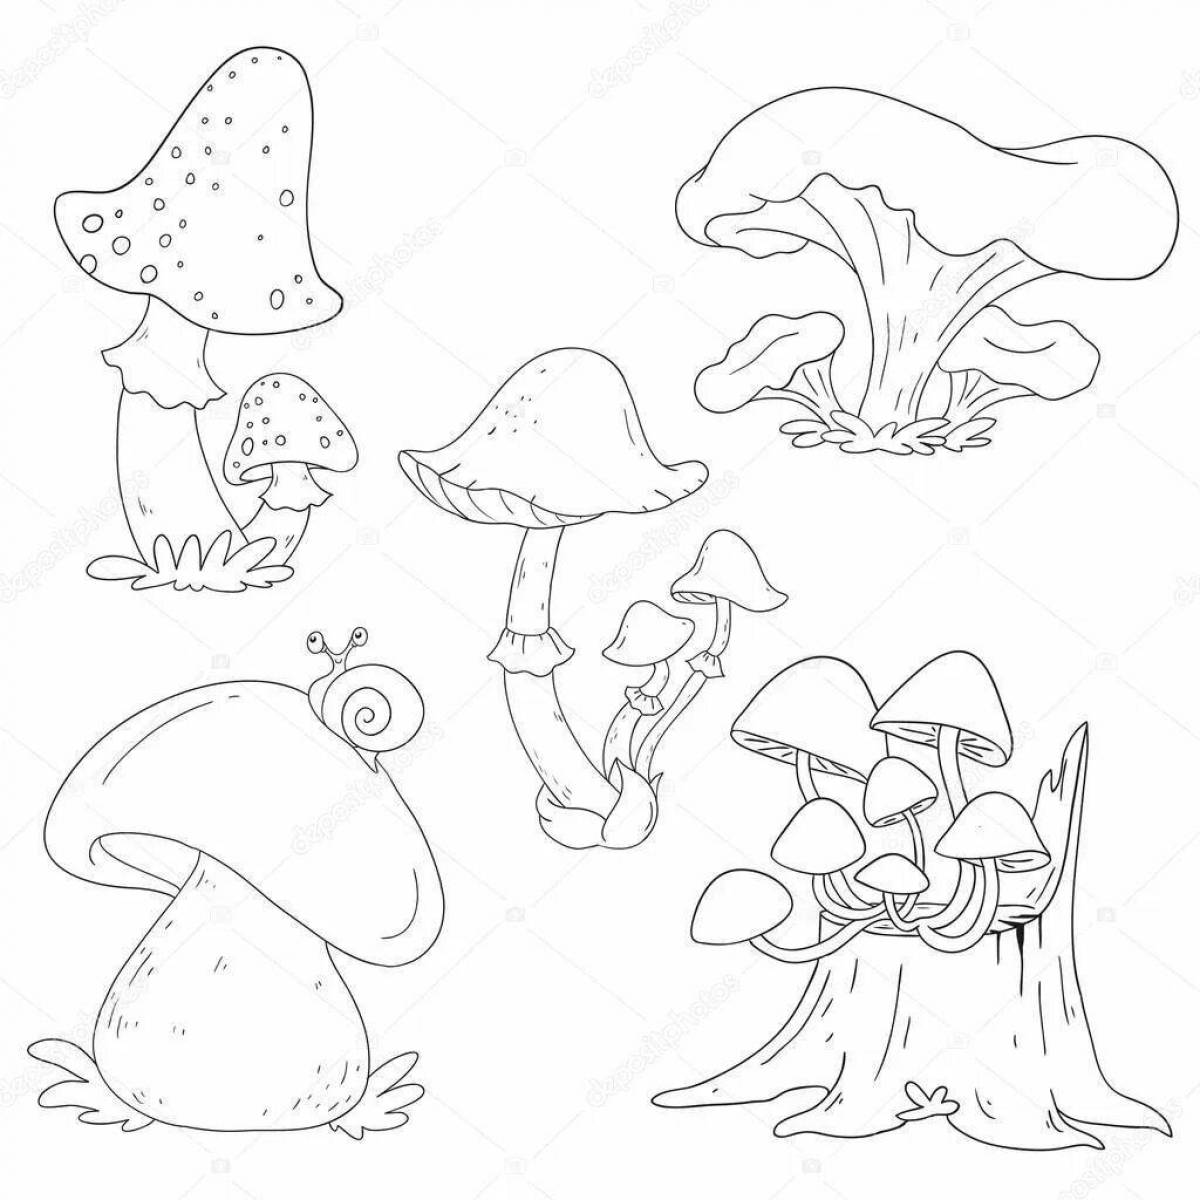 Fascinating non-edible mushrooms for children